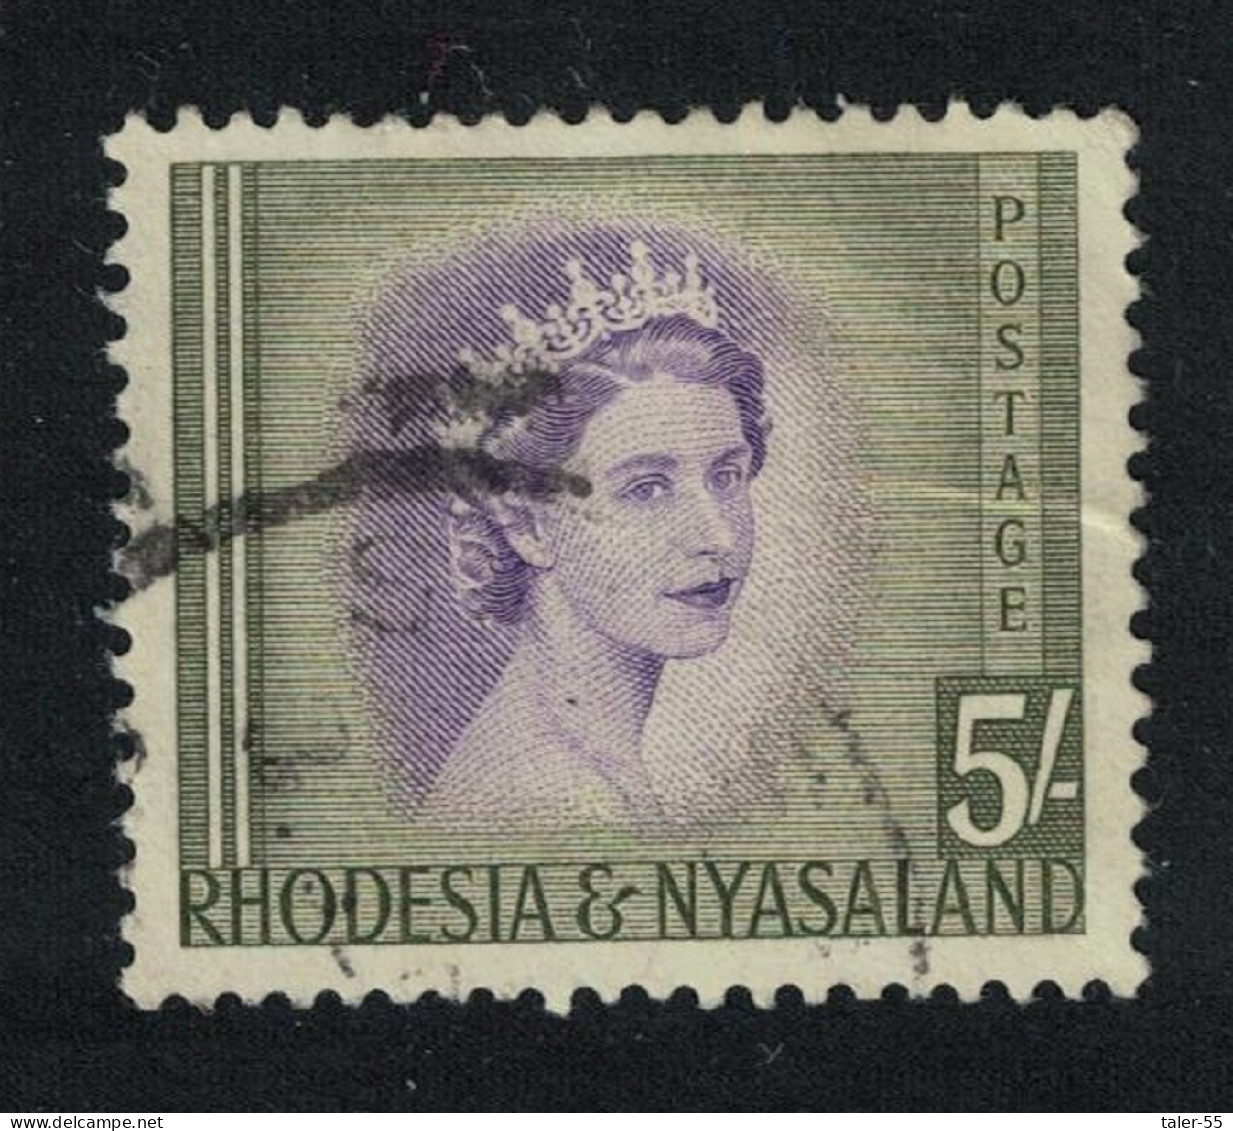 Rhodesia And Nyassa Queen Elizabeth II 5Sh 1954 Canc SG#13 - Rhodesia & Nyasaland (1954-1963)